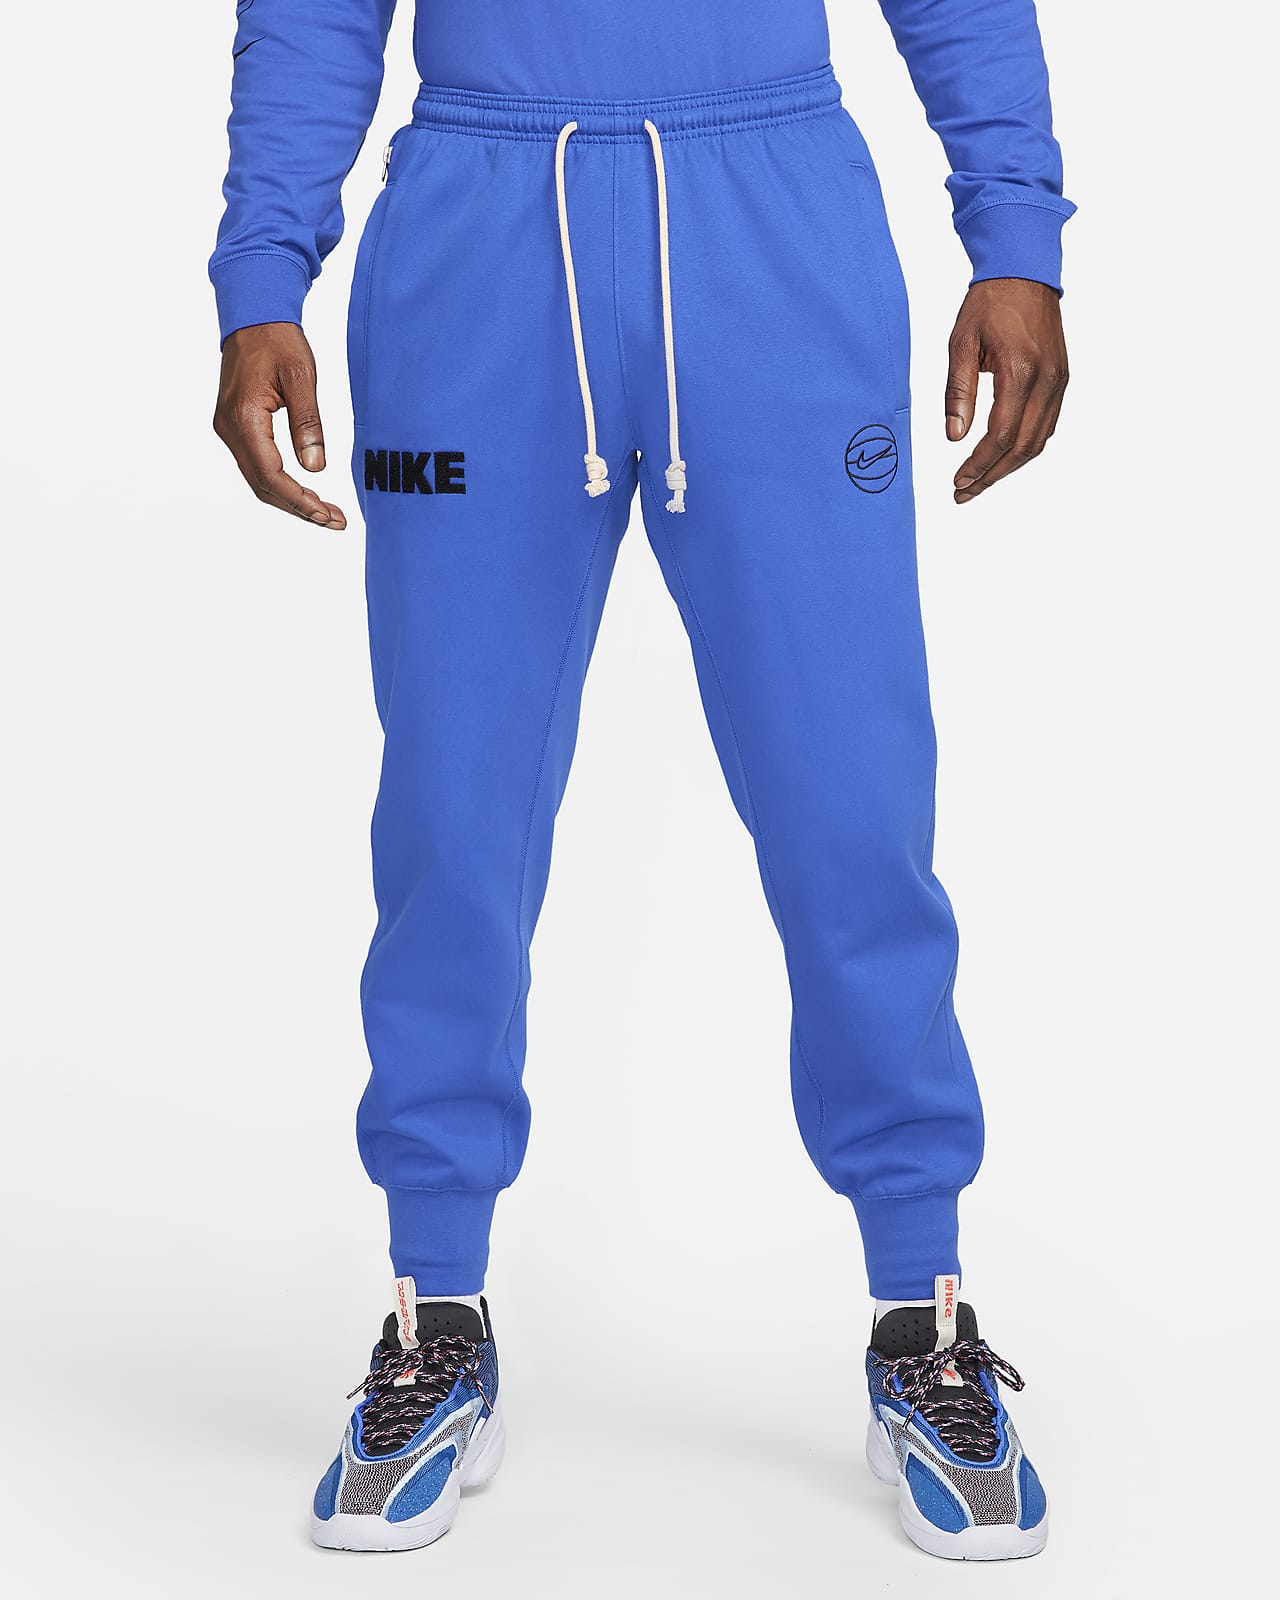 Nike Dri-FIT Standard Issue Men's Cuffed Basketball Trousers. Nike NO